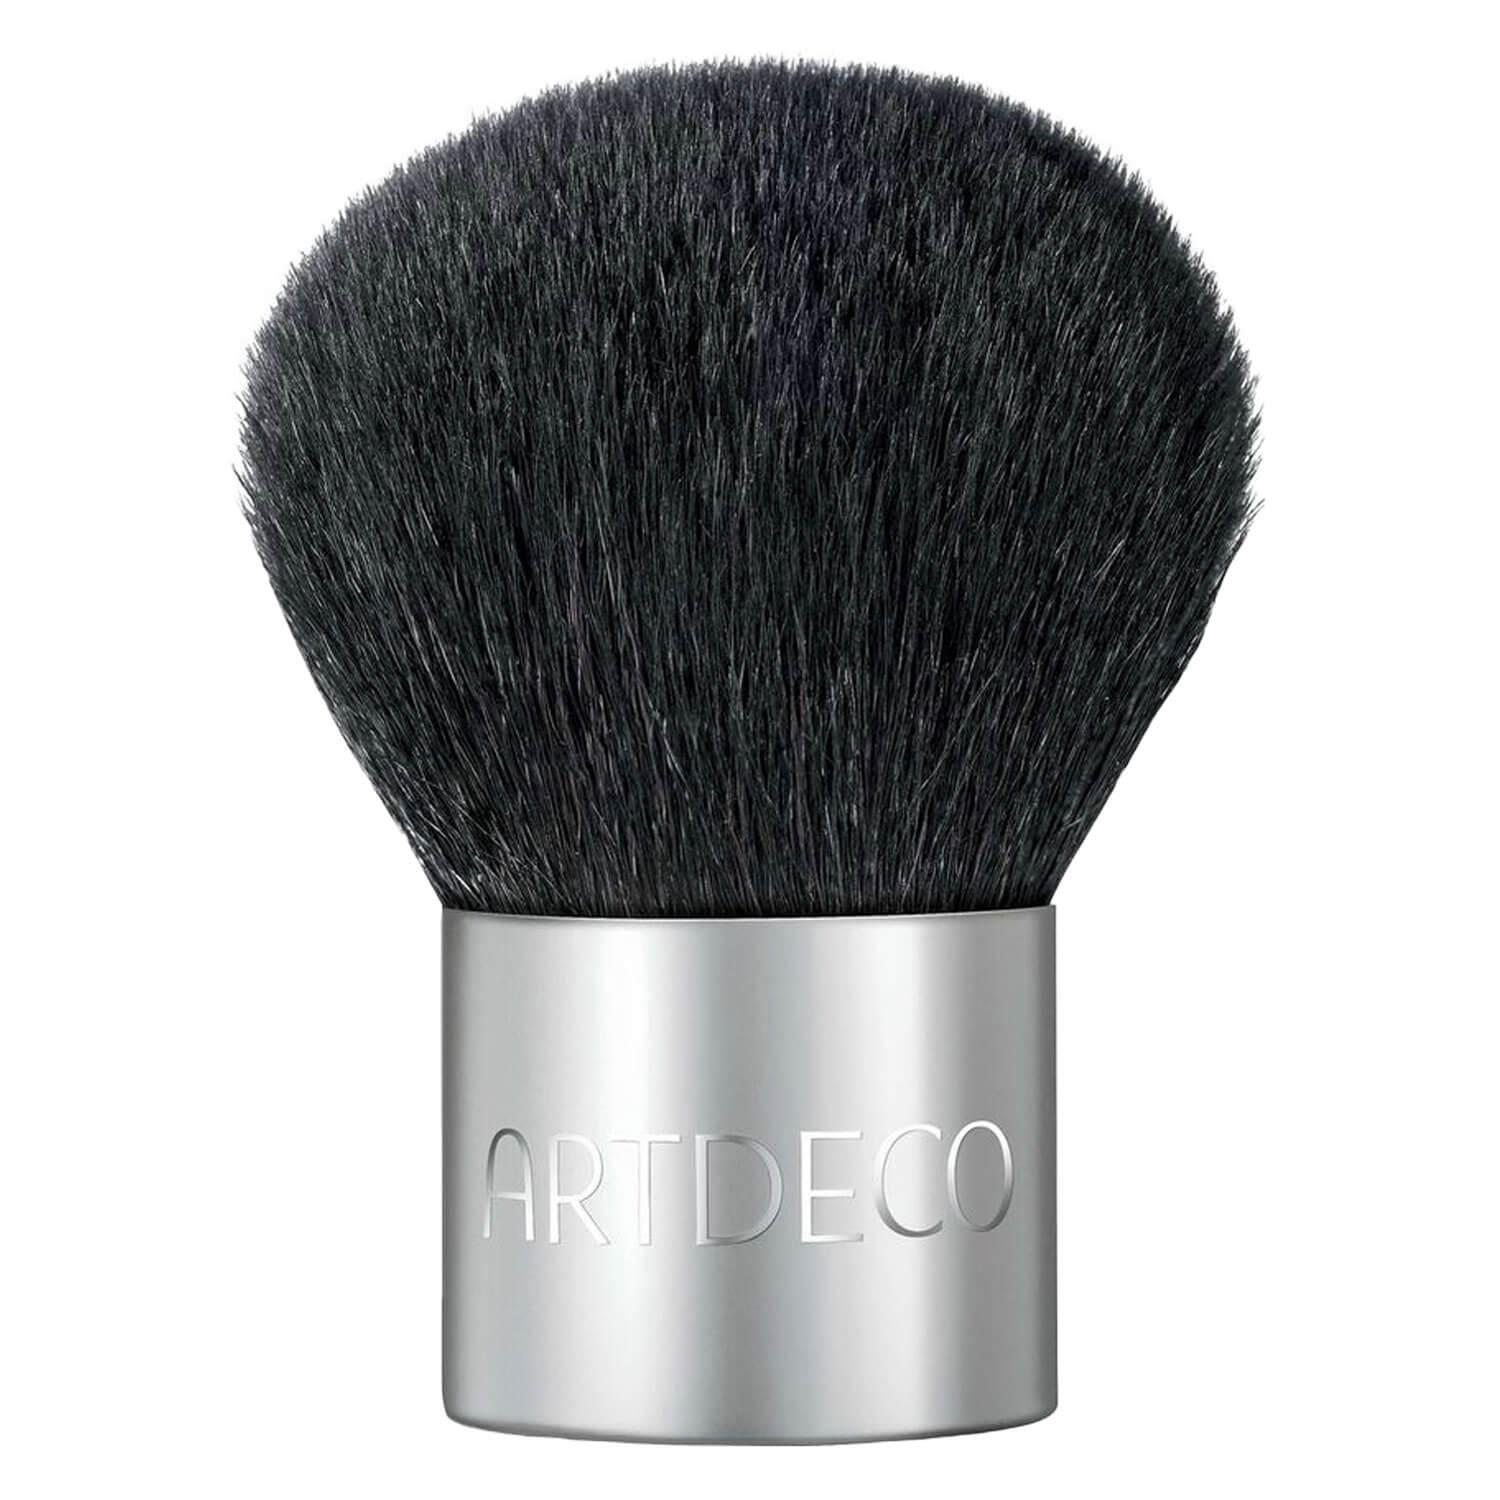 Artdeco Tools - Kabuki Brush for Mineral Powder Foundation